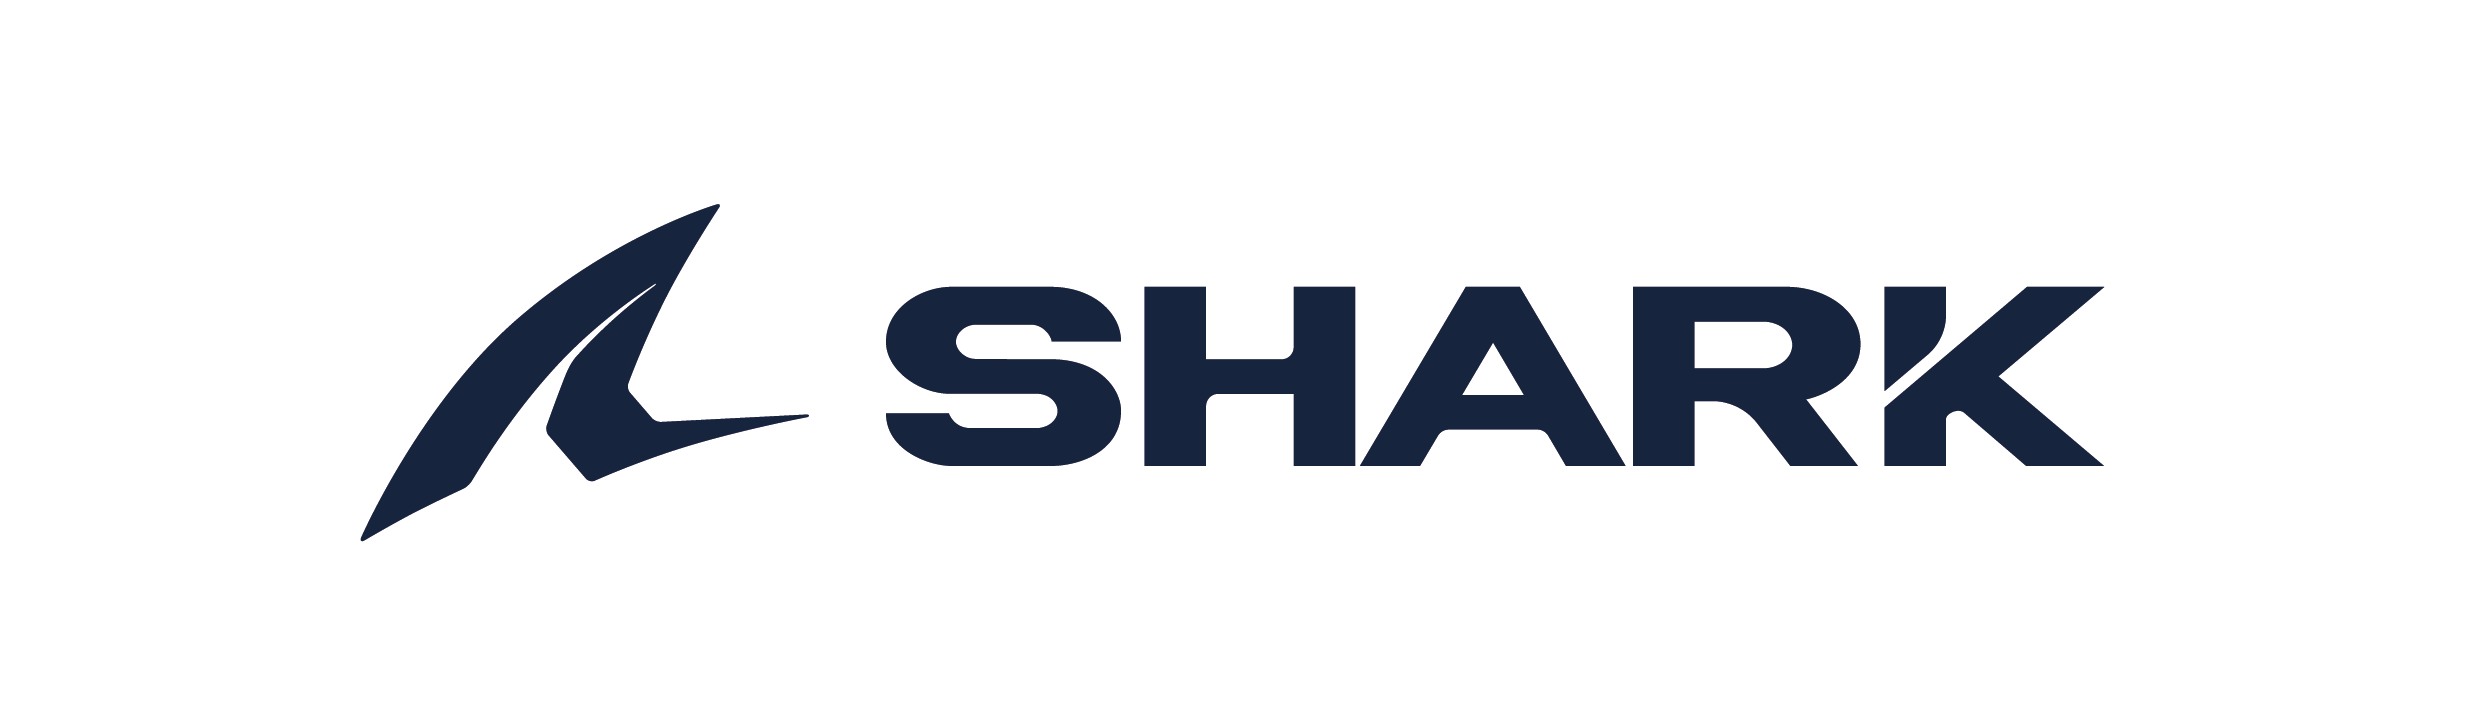 NEW-SHARK-logo-Blue-horizontal-WhiteBackground